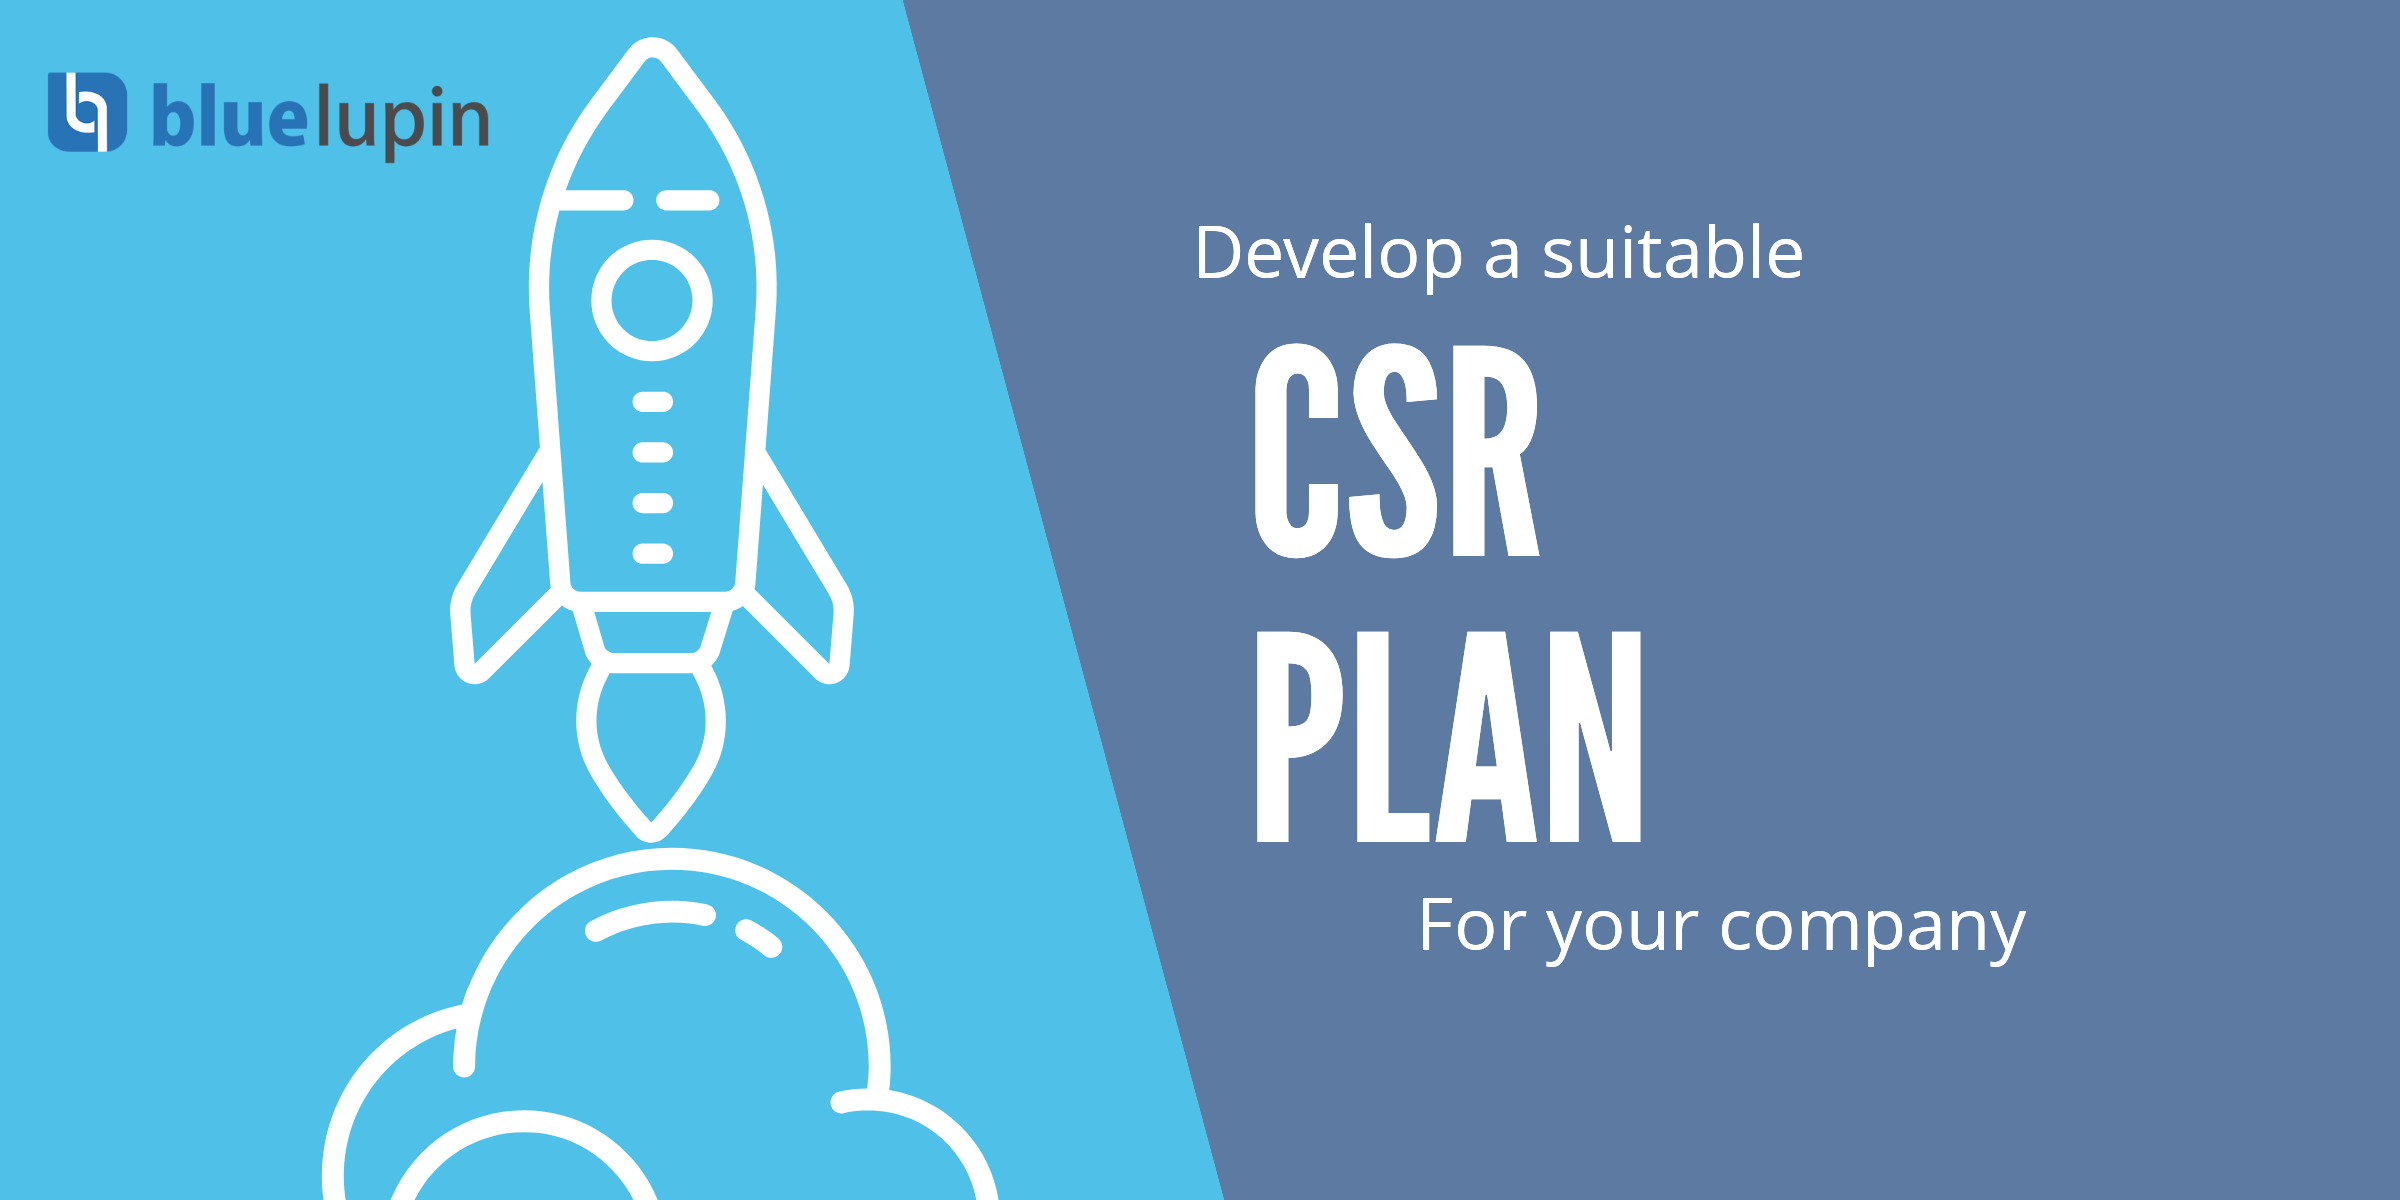 Rocket launch - image showing how to develop suitable CSR plan